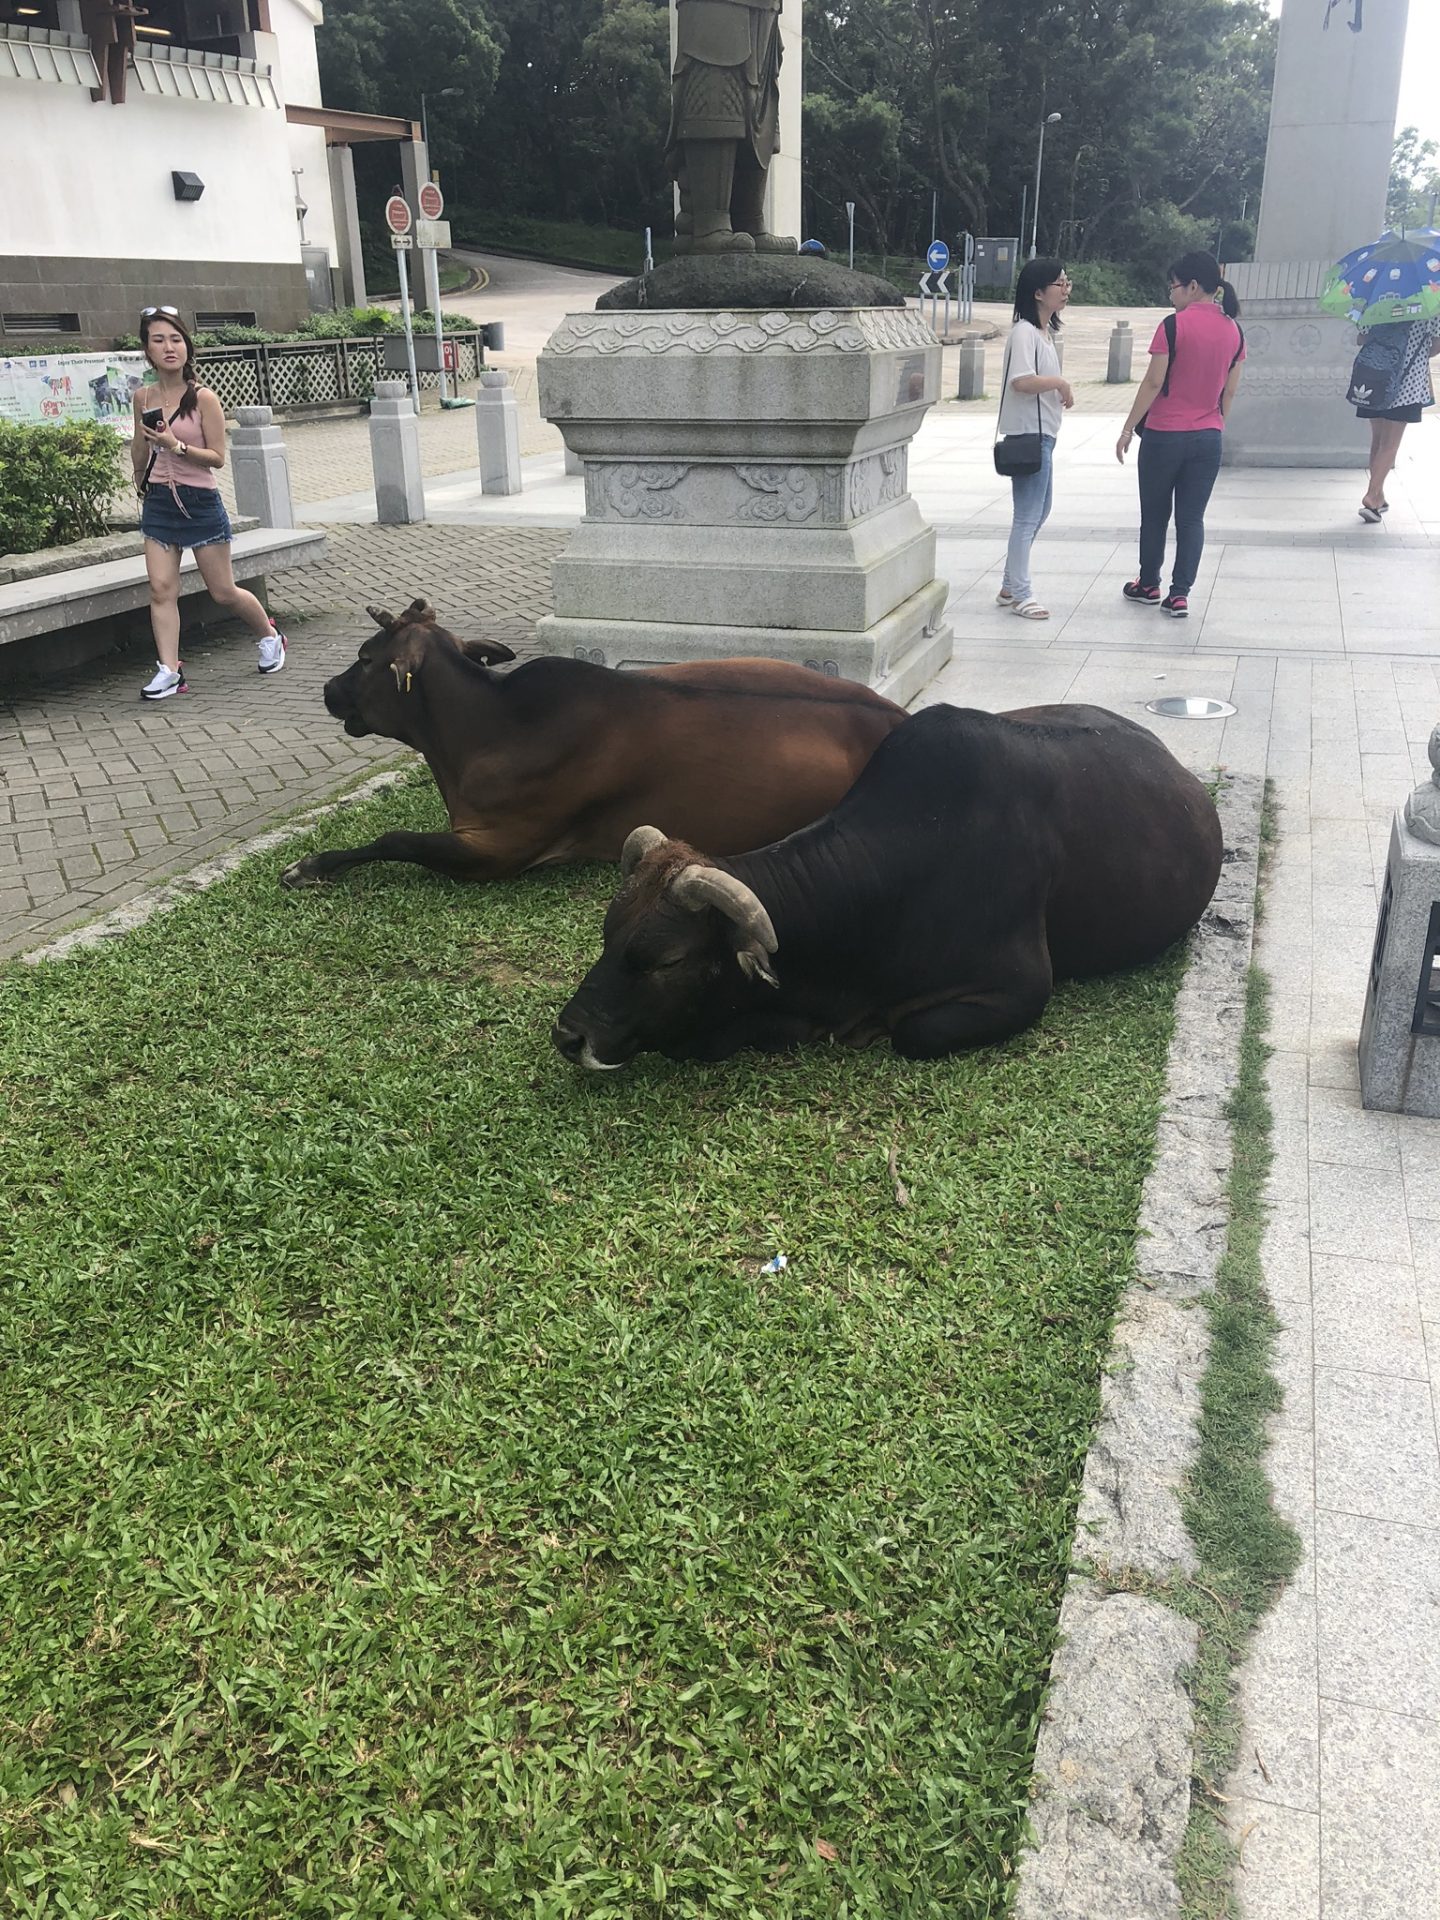 Cows in Ngong Ping village, Lantau Island